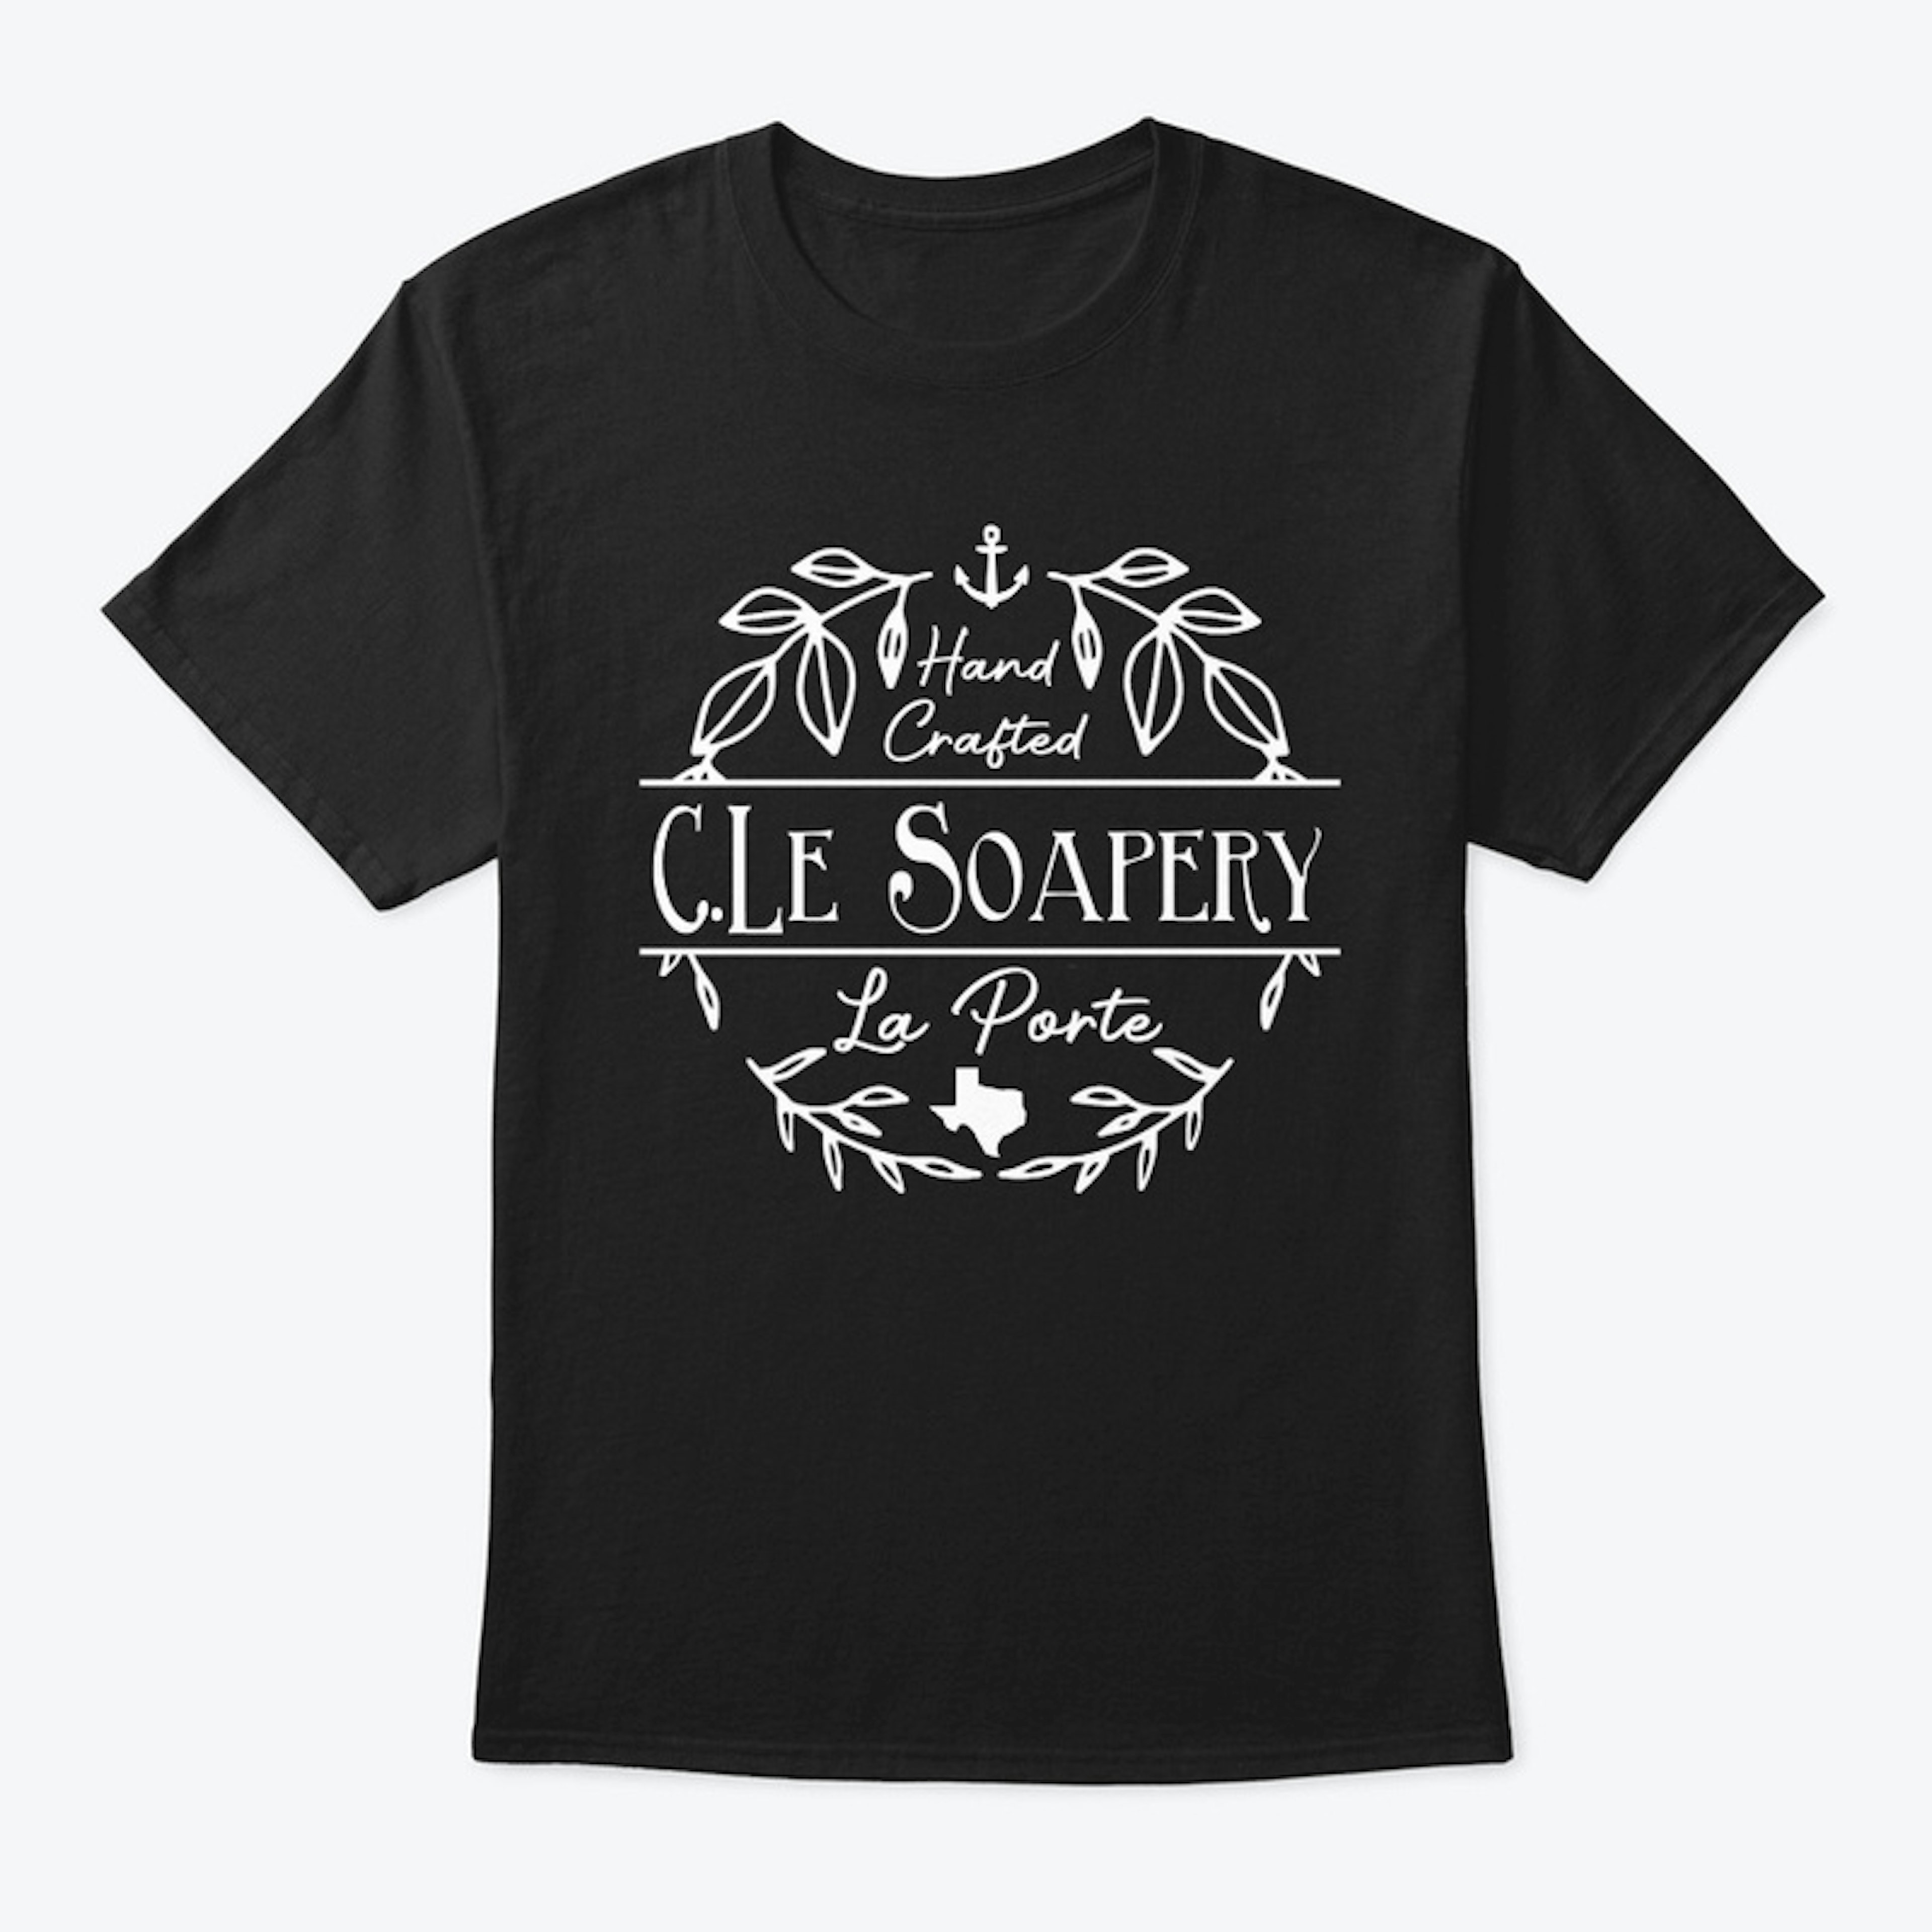 C. Le Soapery Logo light